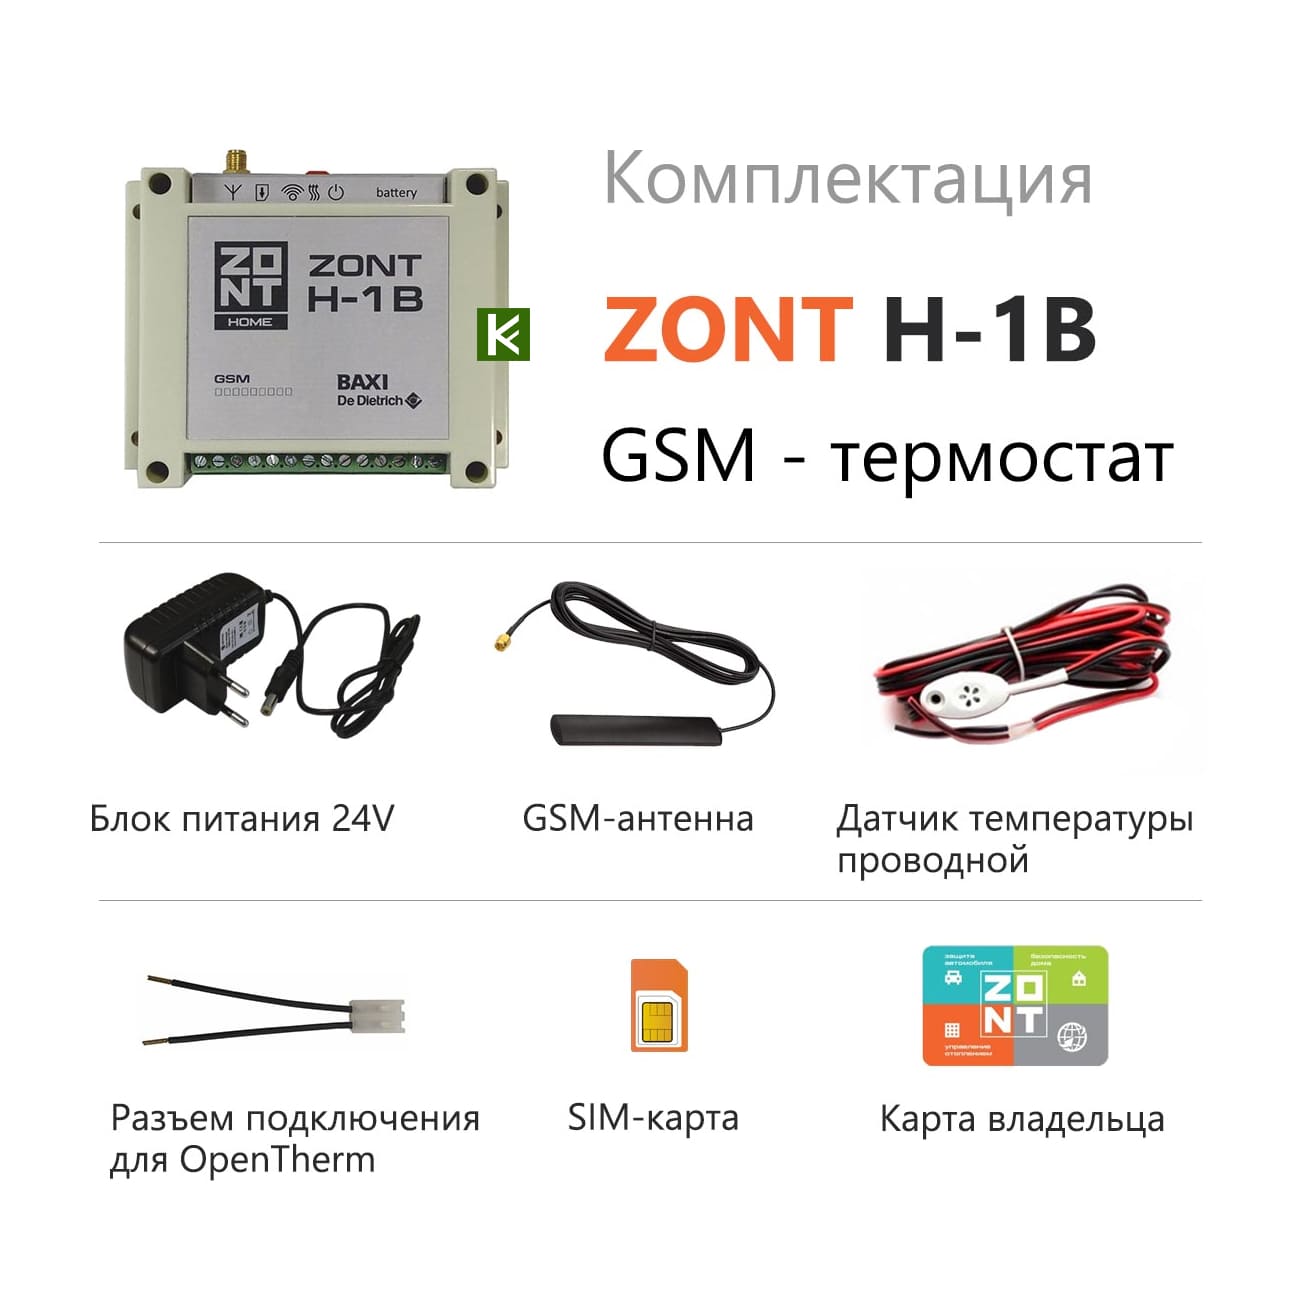 Zont h купить. Zont h-1v Baxi OPENTHERM. GSM Zont h-1v. Система удаленного управления котлом Zont-h1b Baxi. Zont h-1 контроллер.